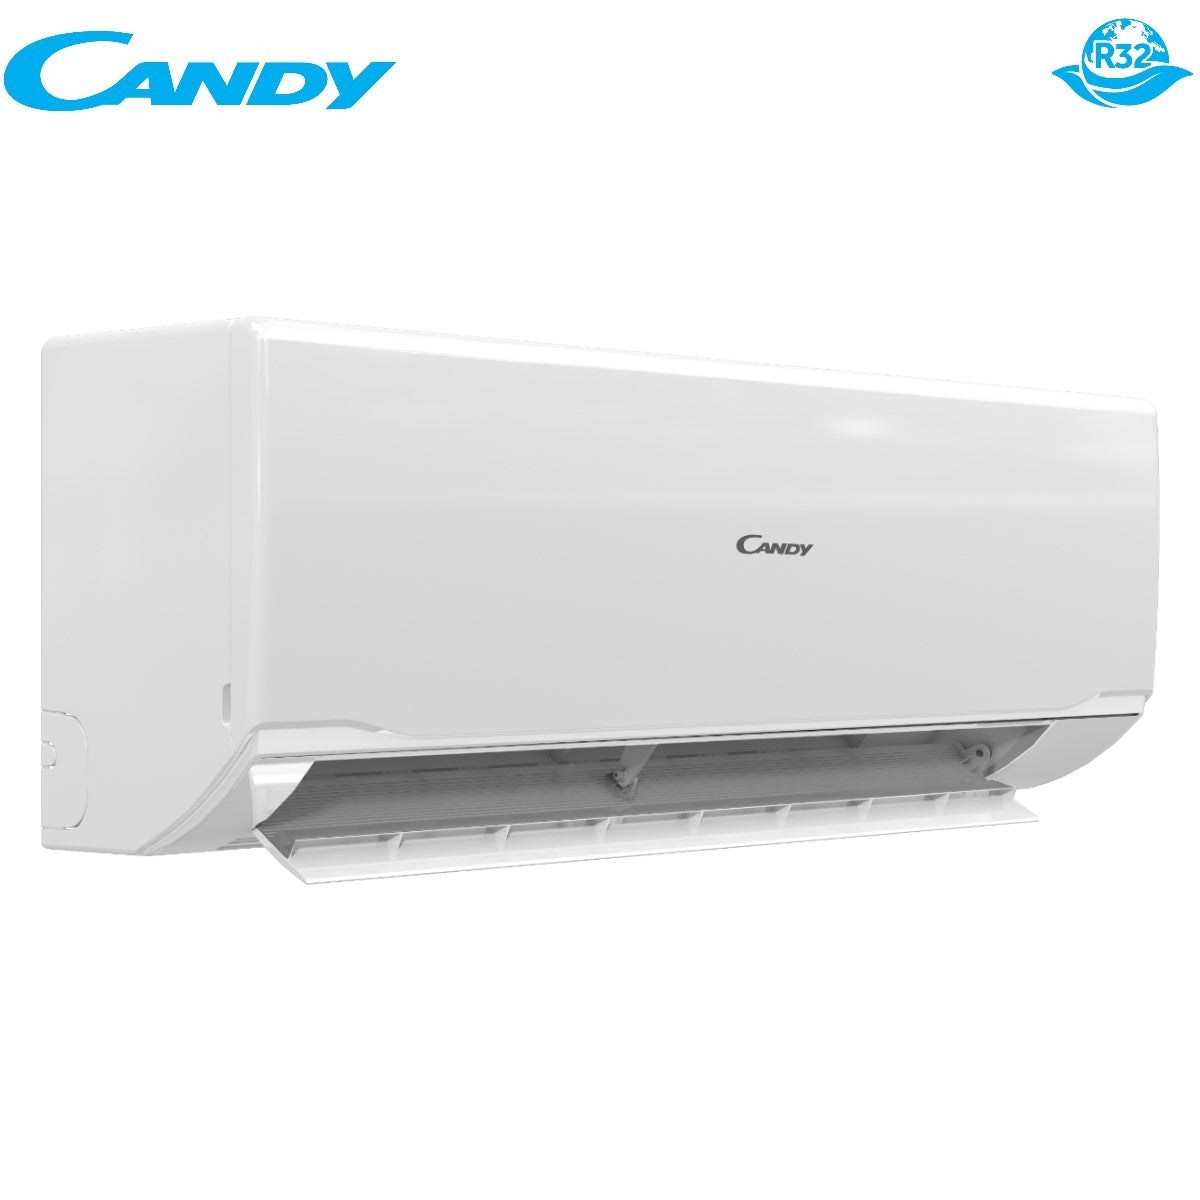 immagine-4-candy-climatizzatore-condizionatore-candy-inverter-serie-pura-9000-btu-cy-09ra-r-32-wi-fi-integrato-classe-aa